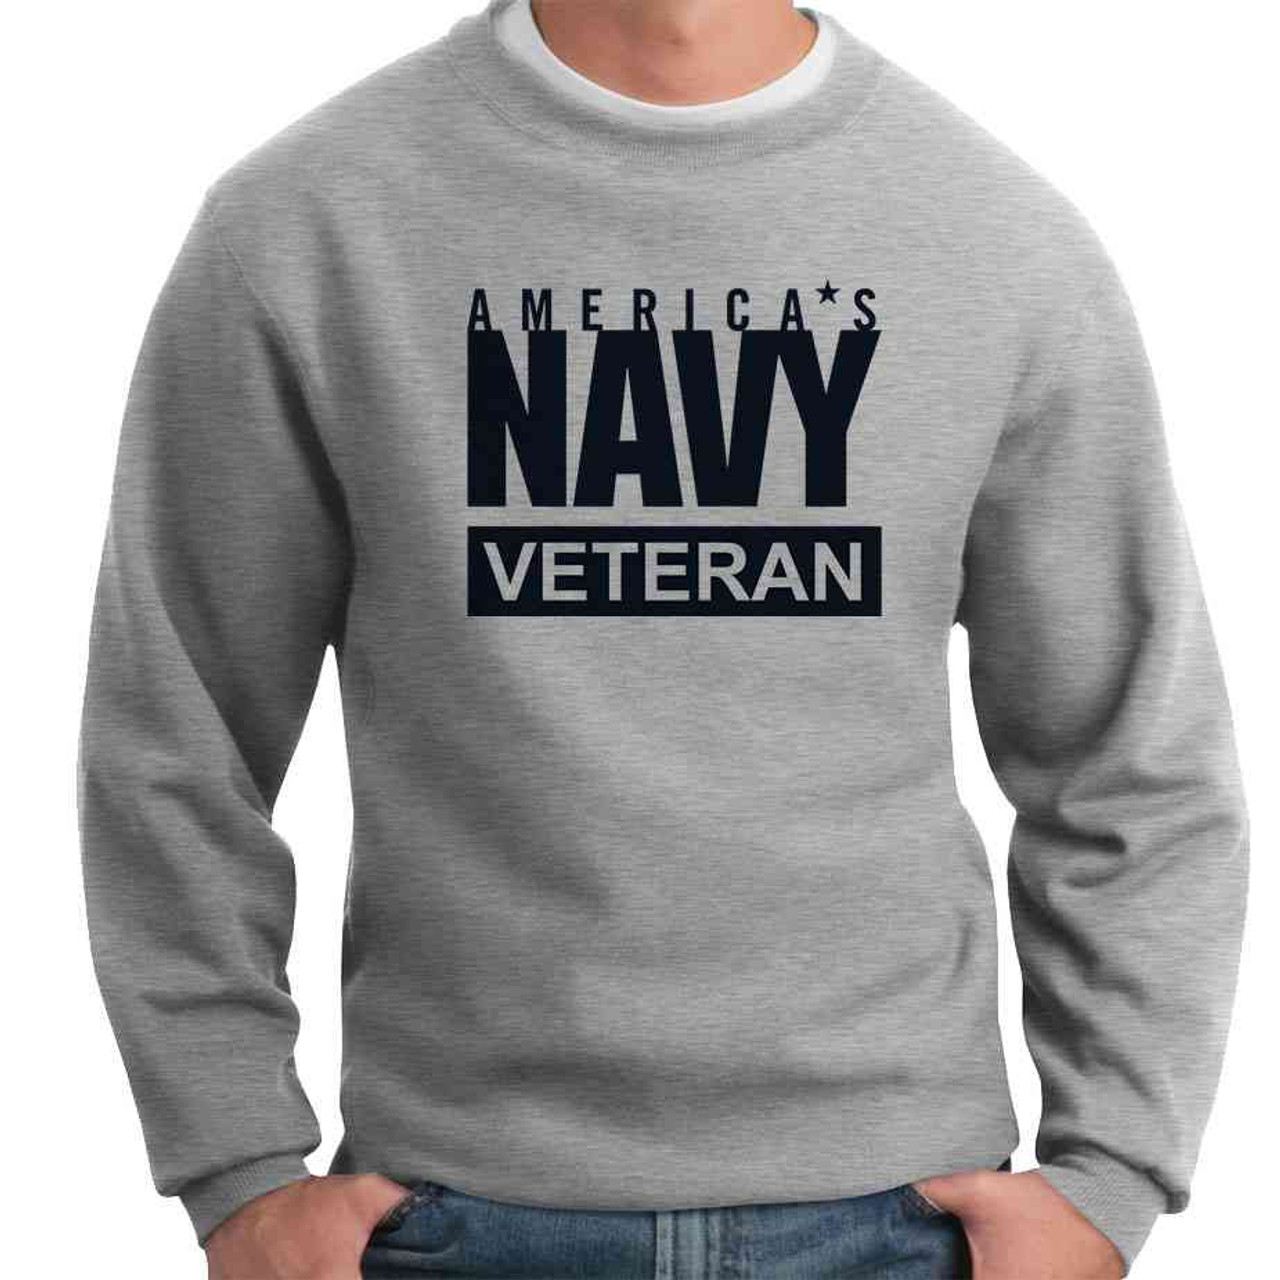 America's Navy Veteran Crewneck Sweatshirt - Officially Licensed